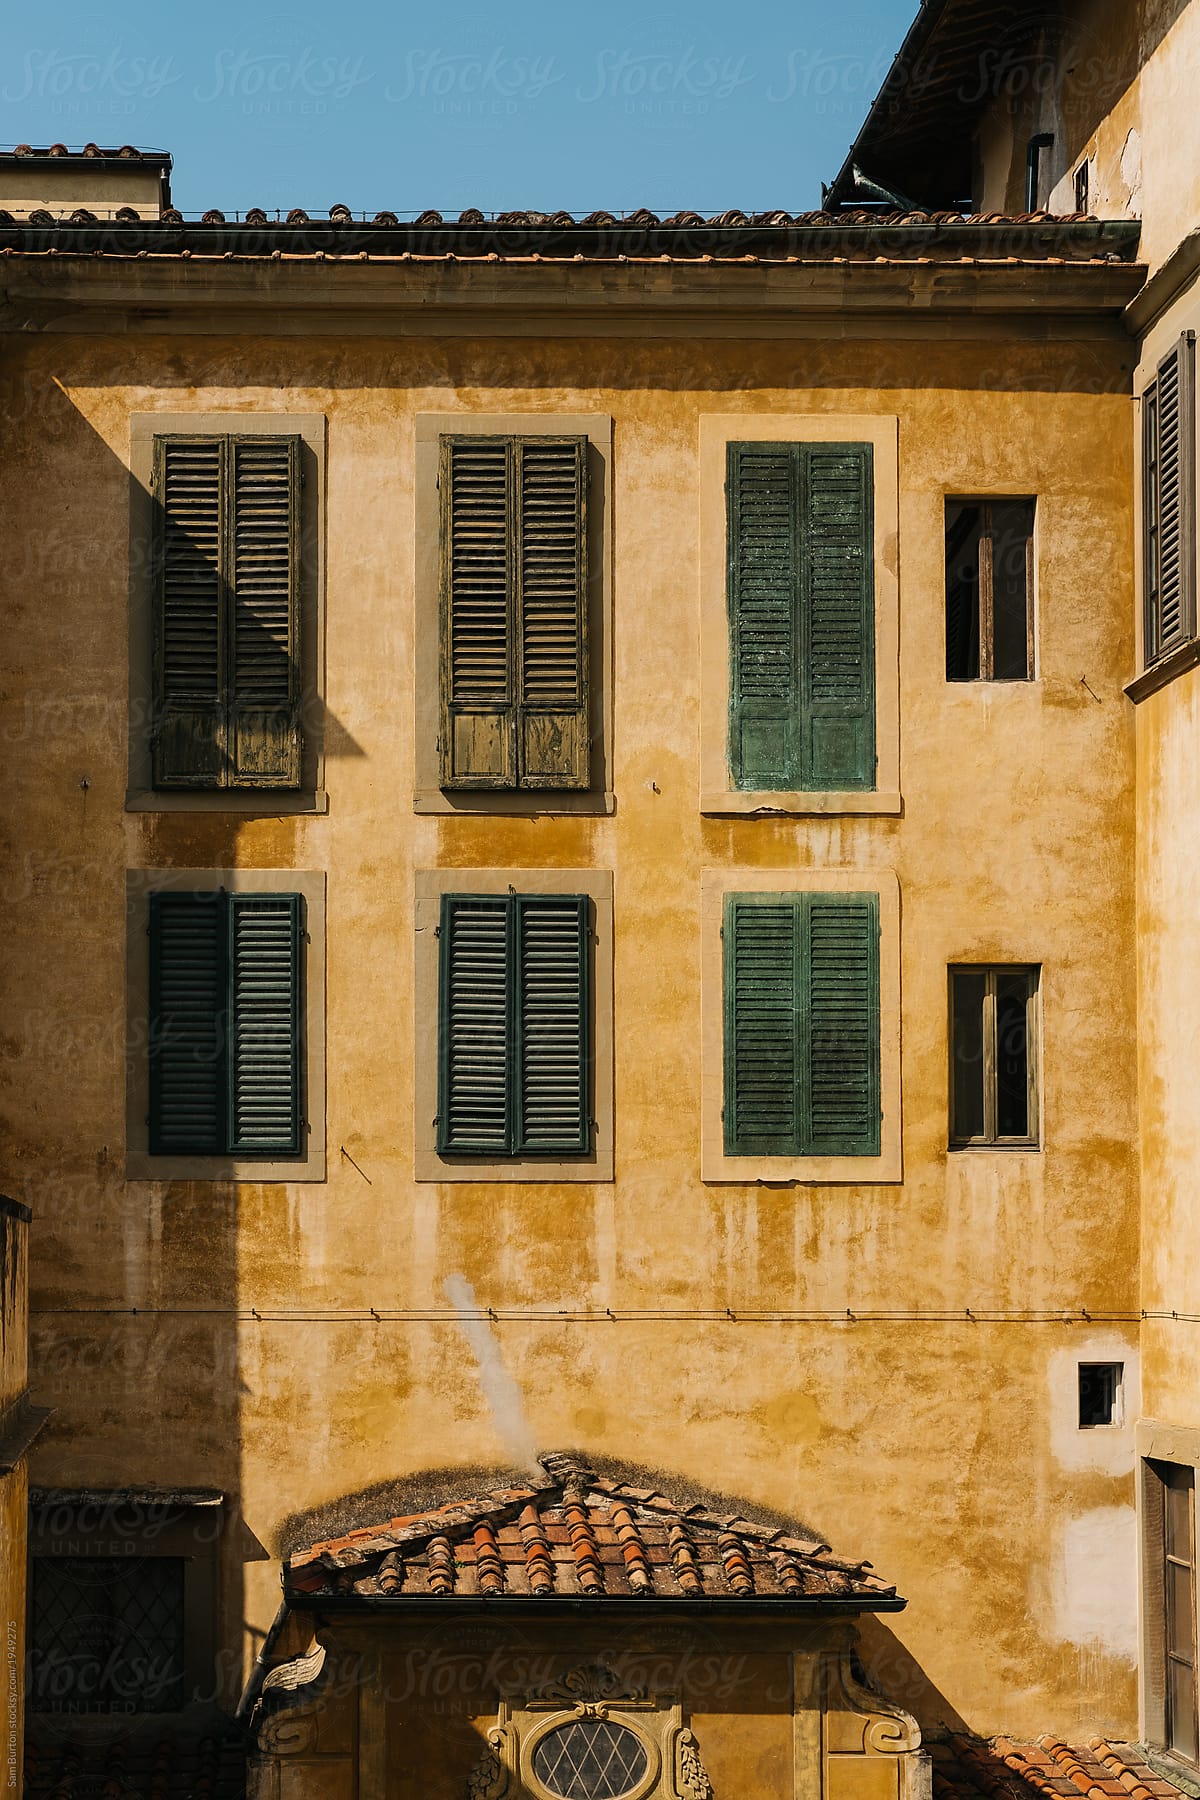 traditional italian architecture